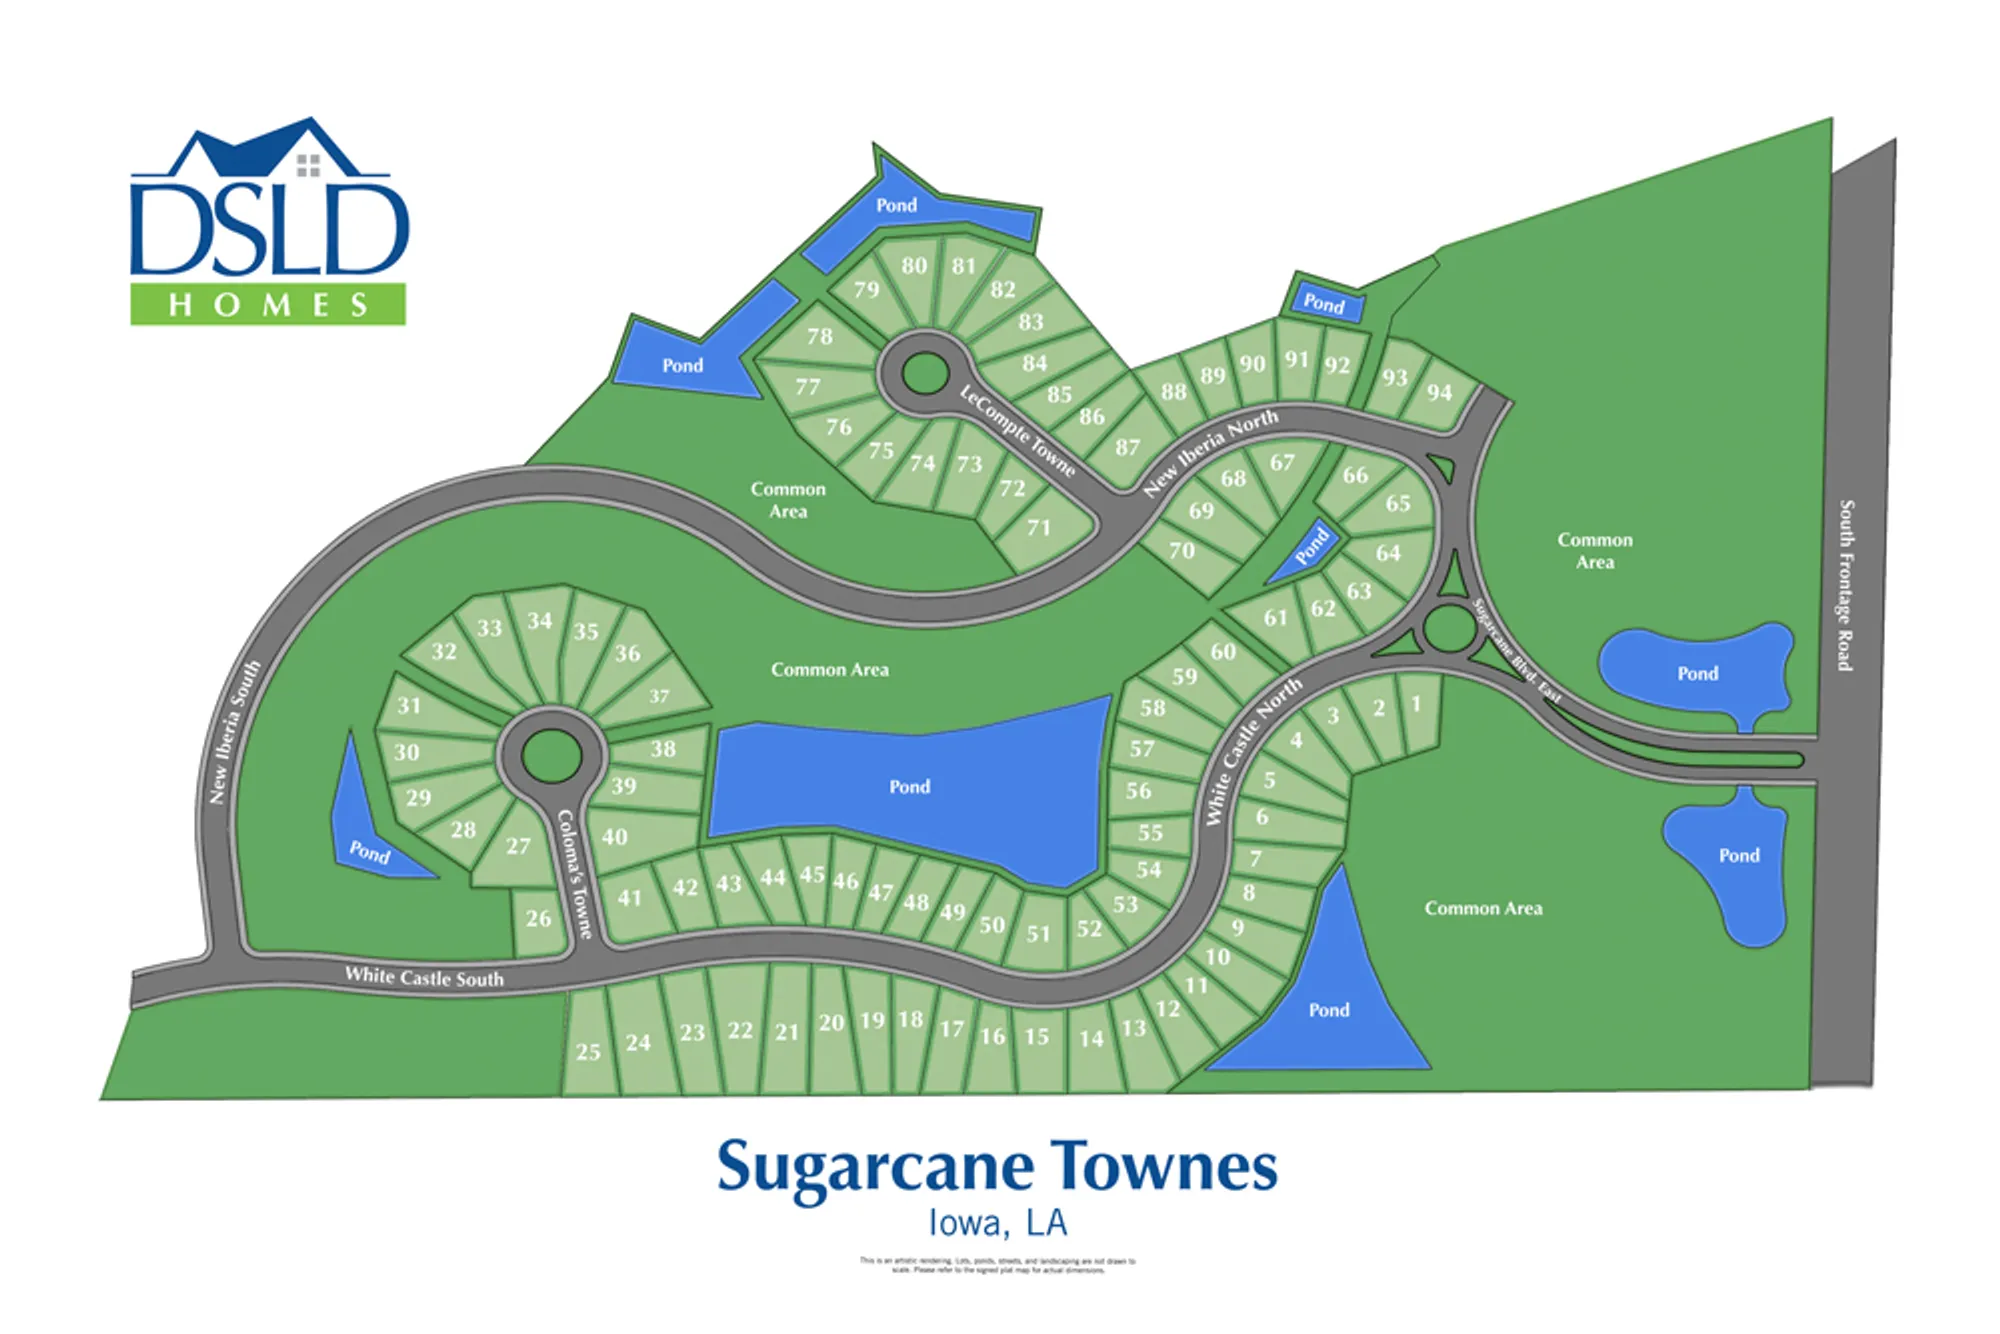 Sugarcane Townes